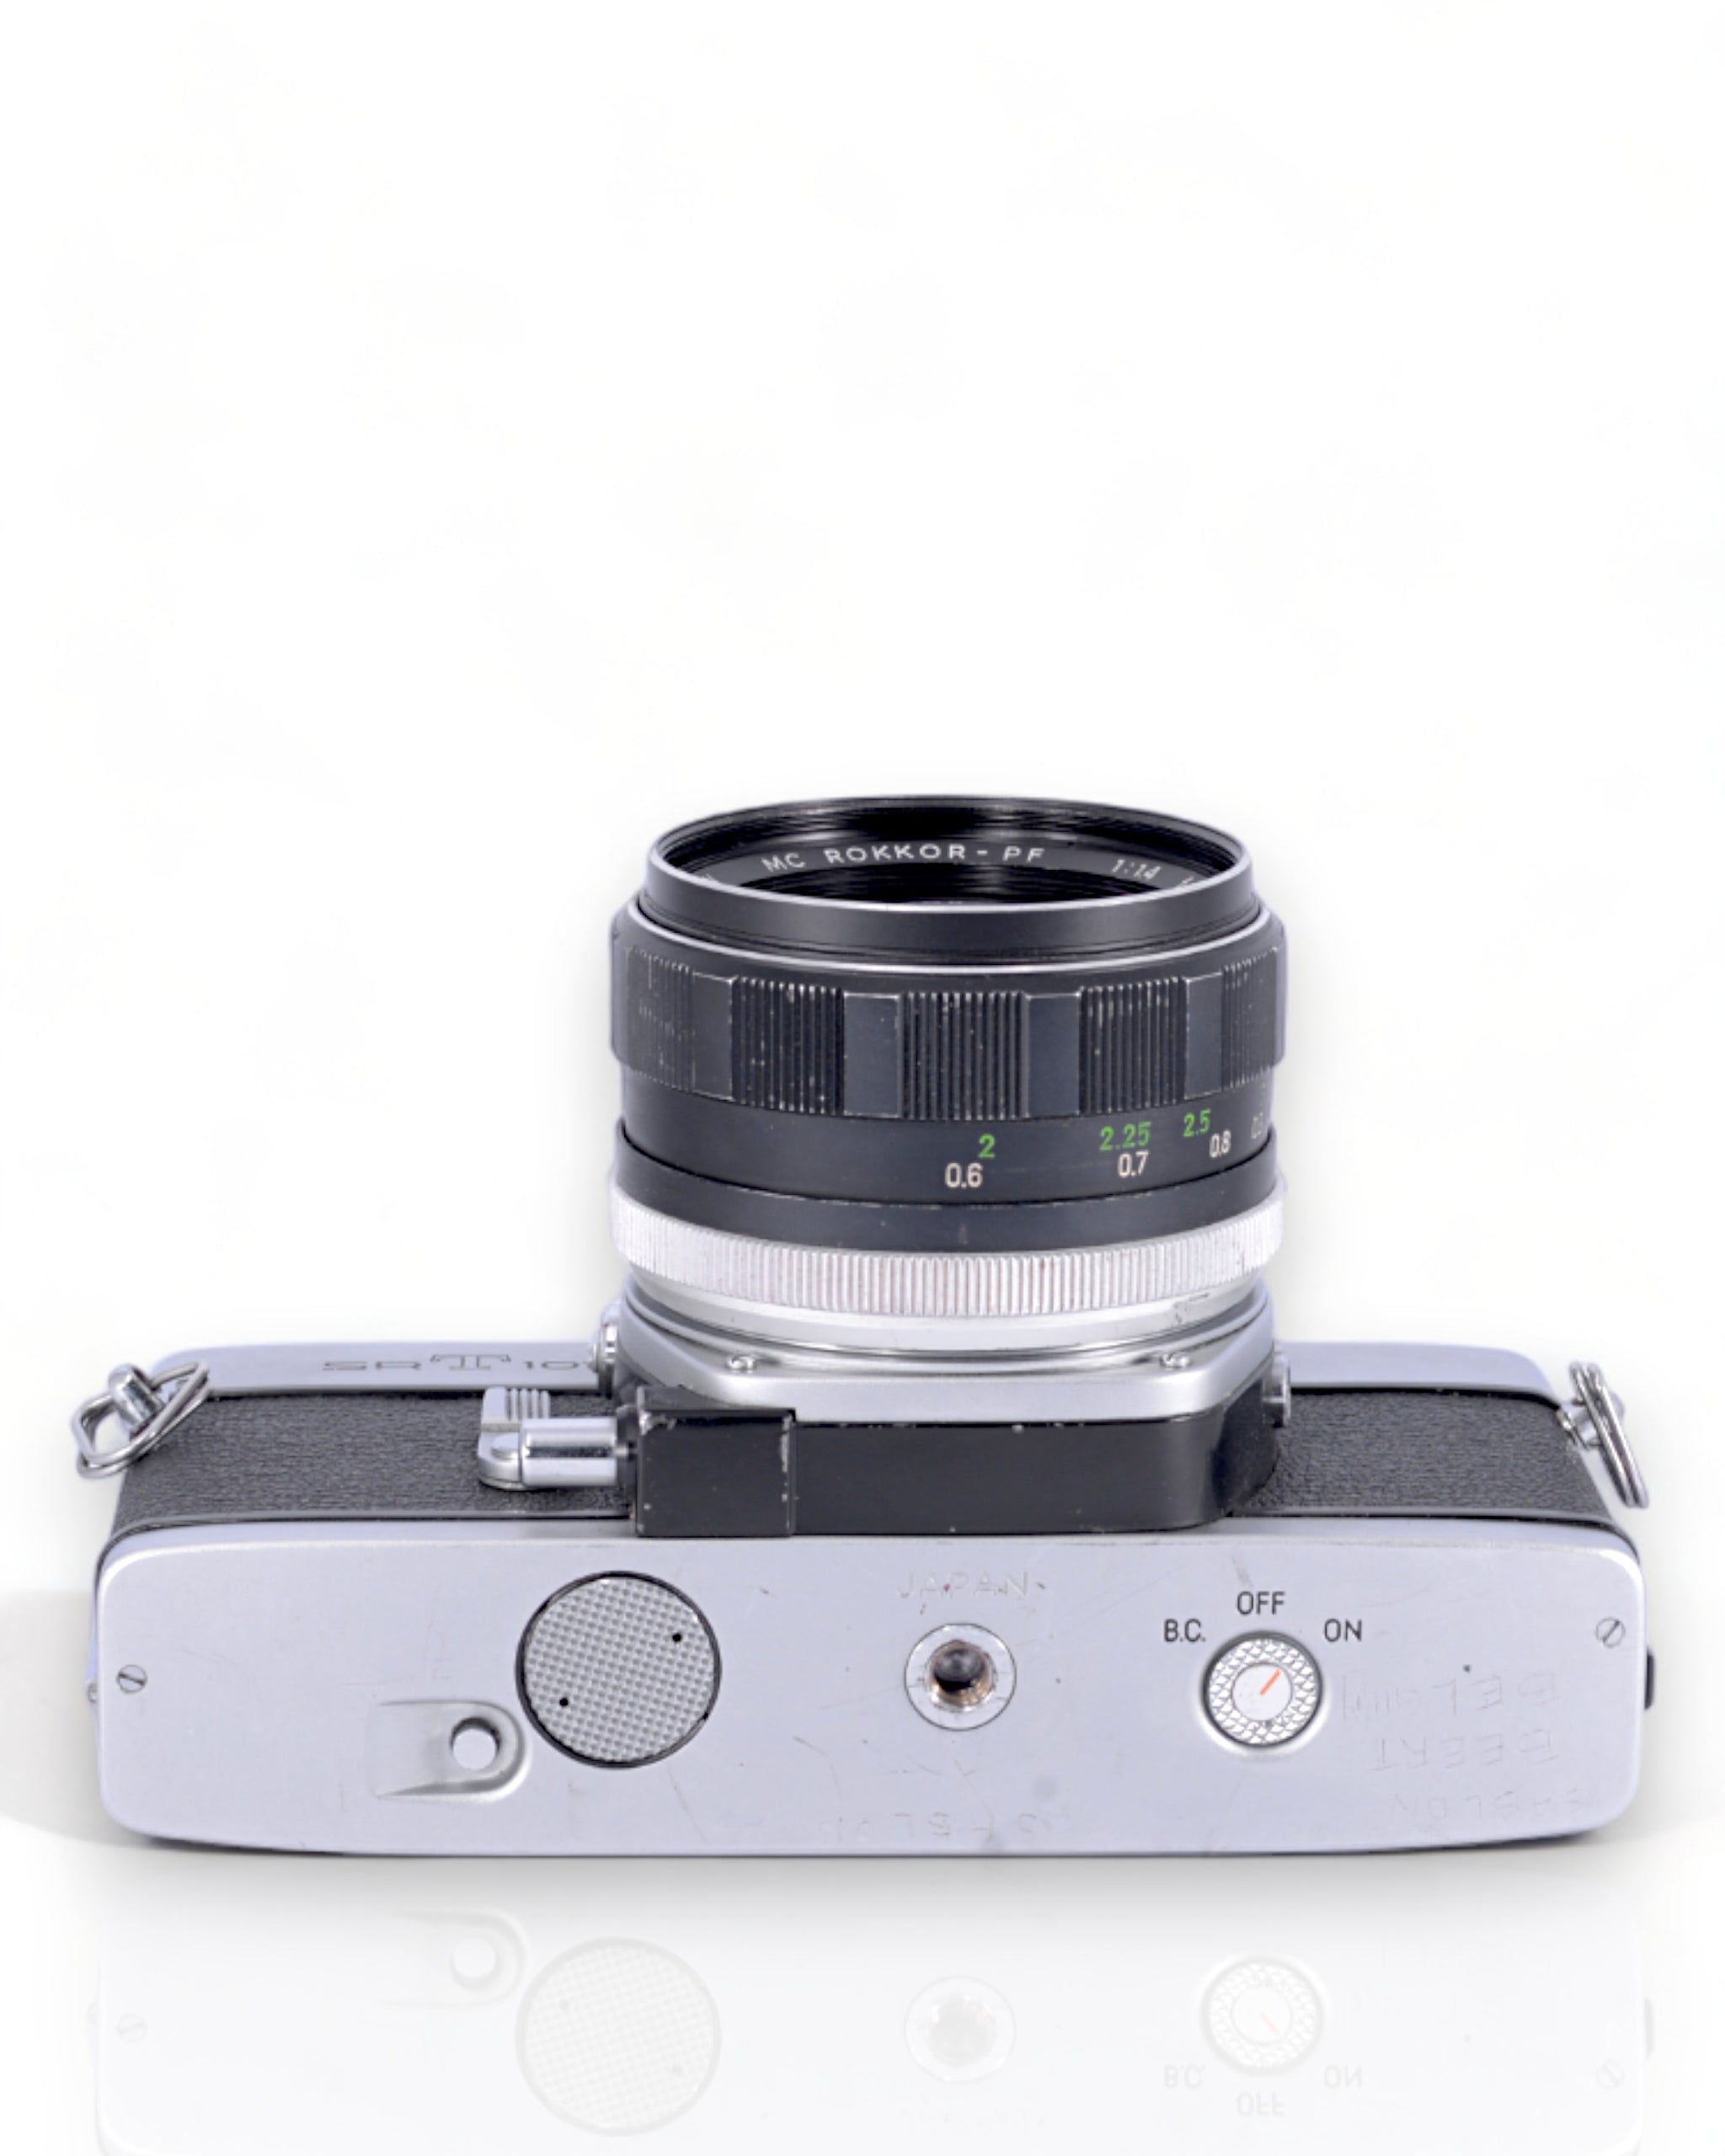 Minolta SRT 101 35mm SLR Film Camera with 58mm f1.4 Lens - Mori 